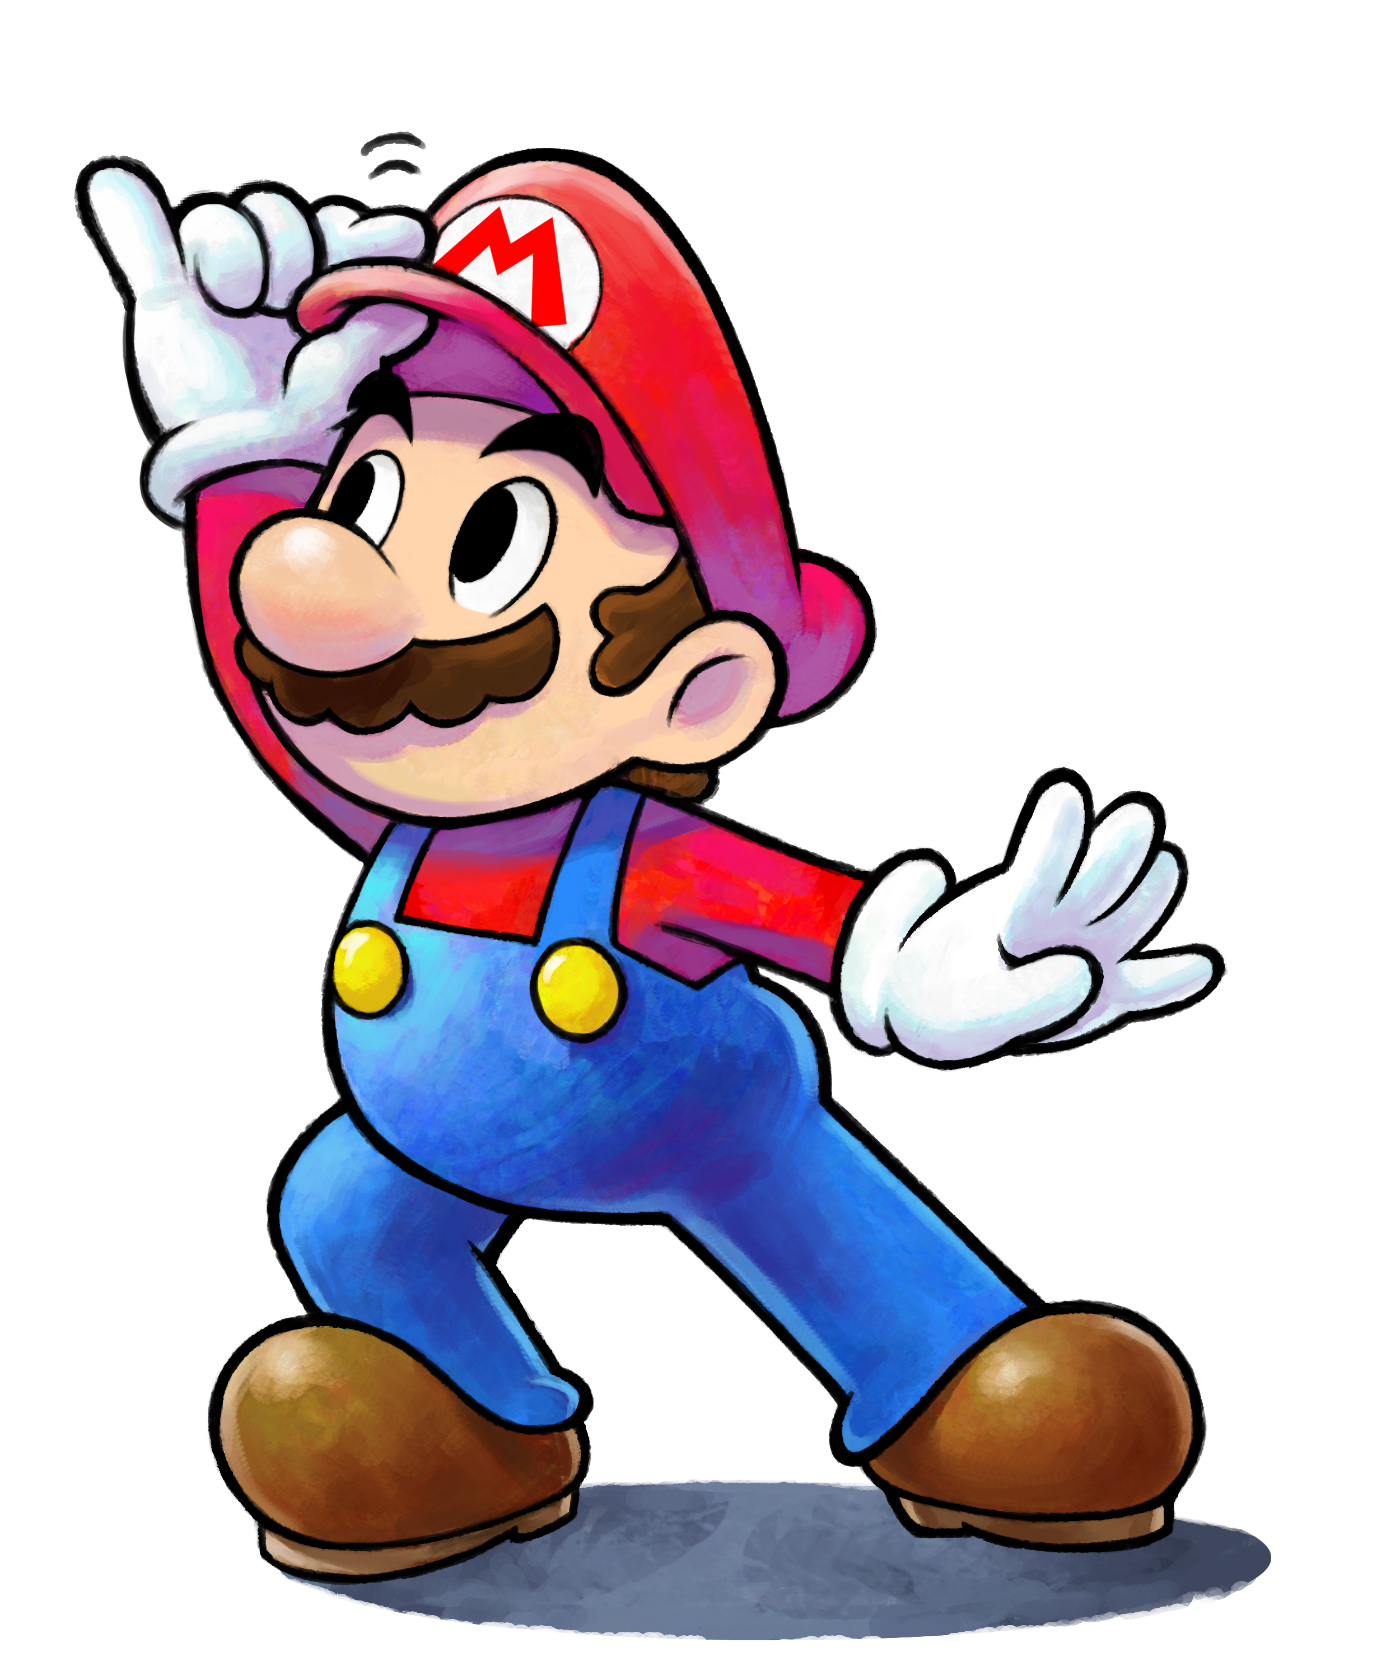 ［E3 2015］マリオとペーパーマリオが活躍する，3DS「マリオ＆ルイージRPG ペーパーマリオMIX」が2015年内に発売［E3 2015］マリオとペーパーマリオが活躍する，3DS「マリオ＆ルイージRPG ペーパーマリオMIX」が2015年内に発売